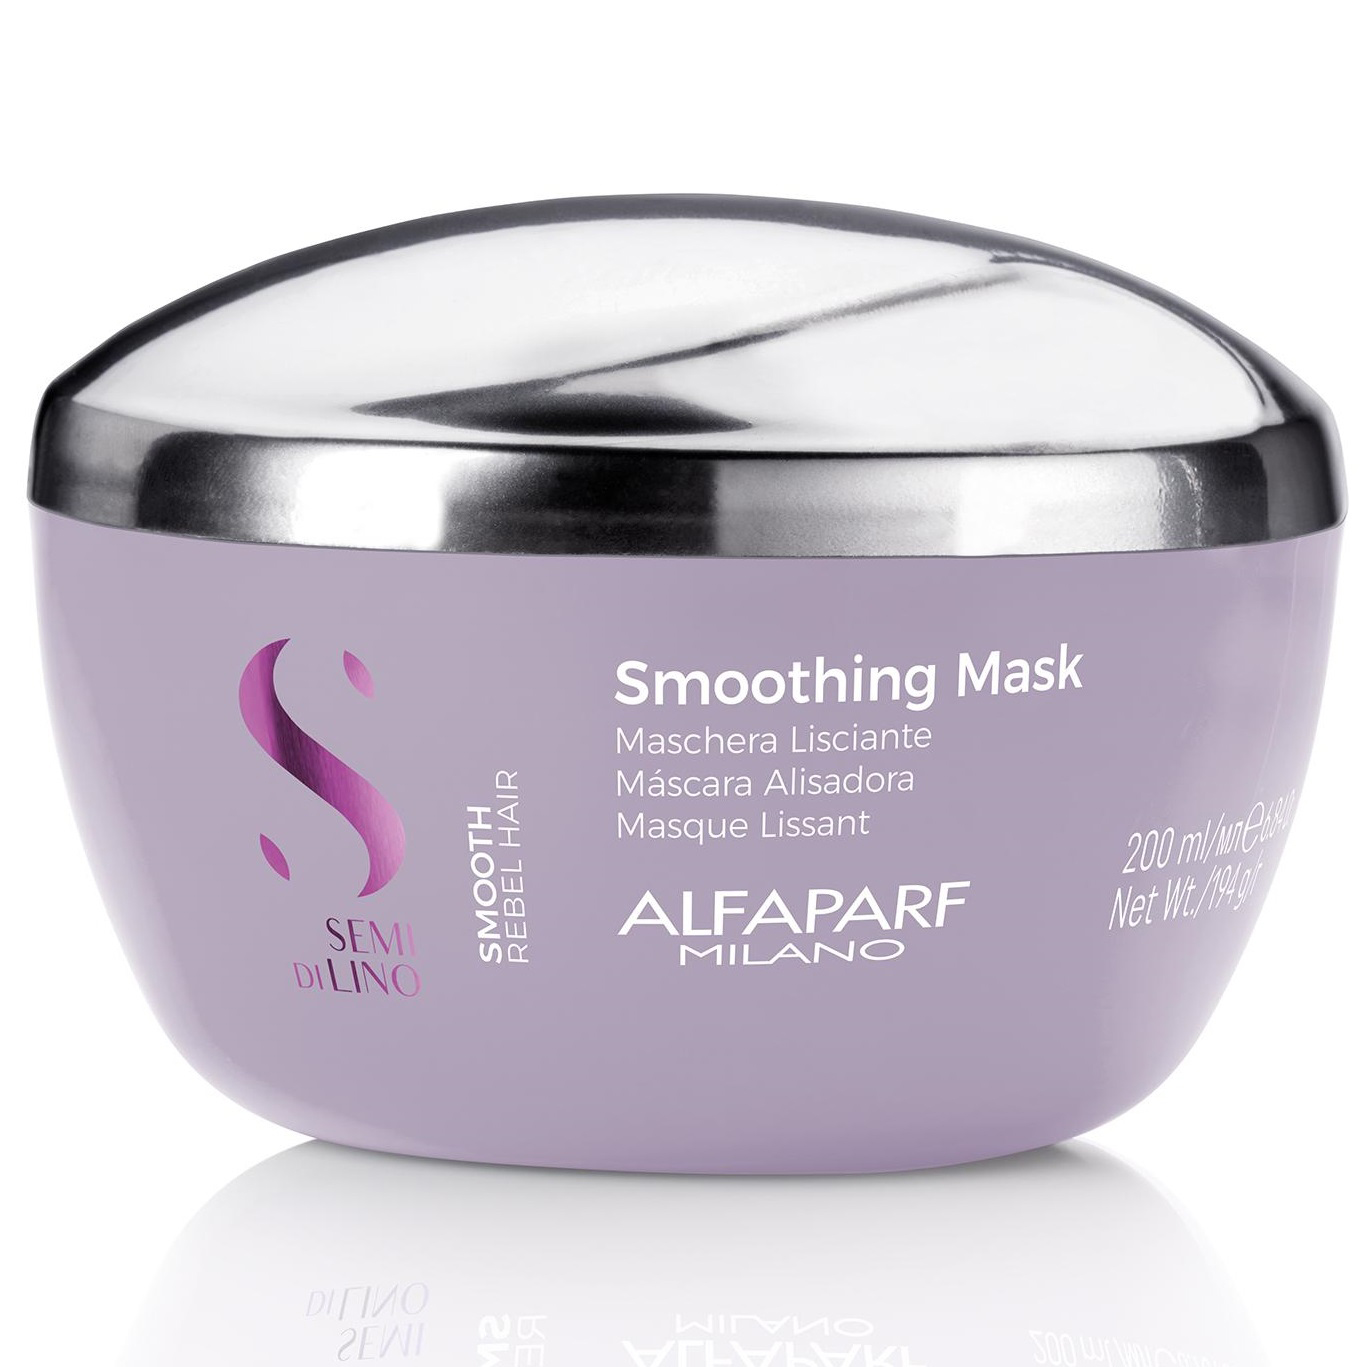 Alfaparf Milano Разглаживающая маска для непослушных волос, 200 мл (Alfaparf Milano, SDL Smoothing) стайлер cantu smooth для густых волос